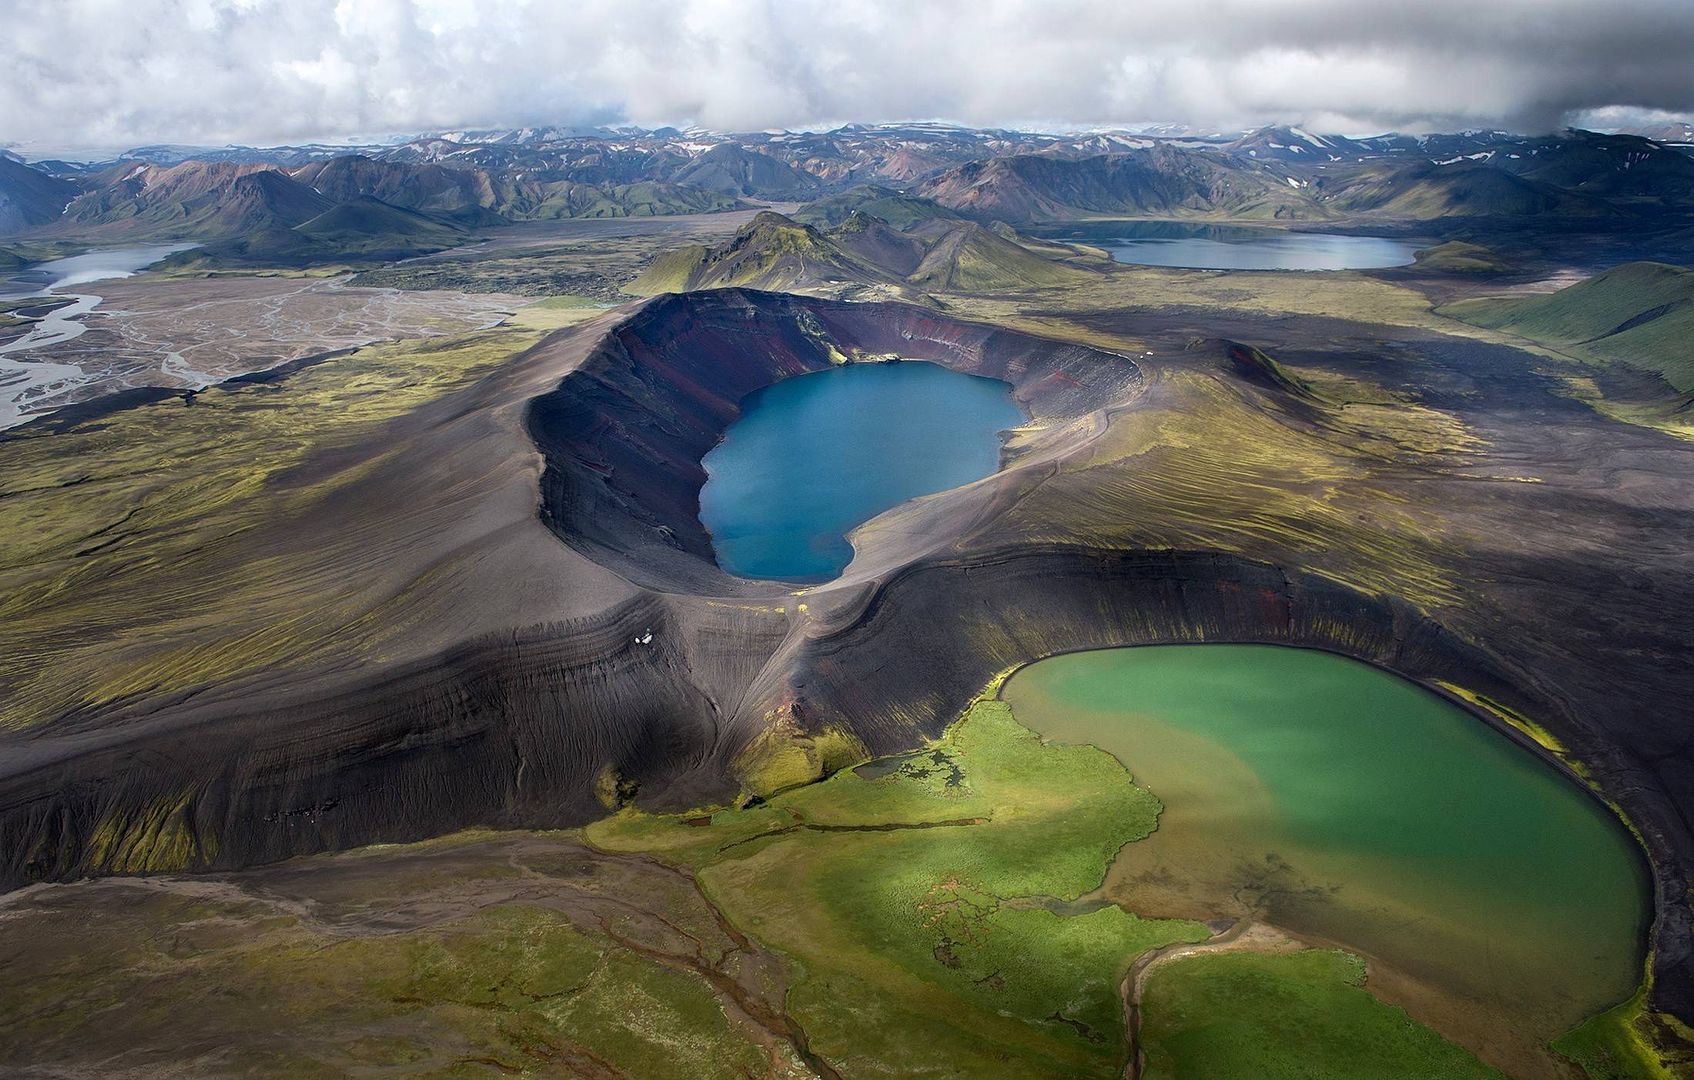 Volcanic Landscape in Iceland photo togLr.jpg